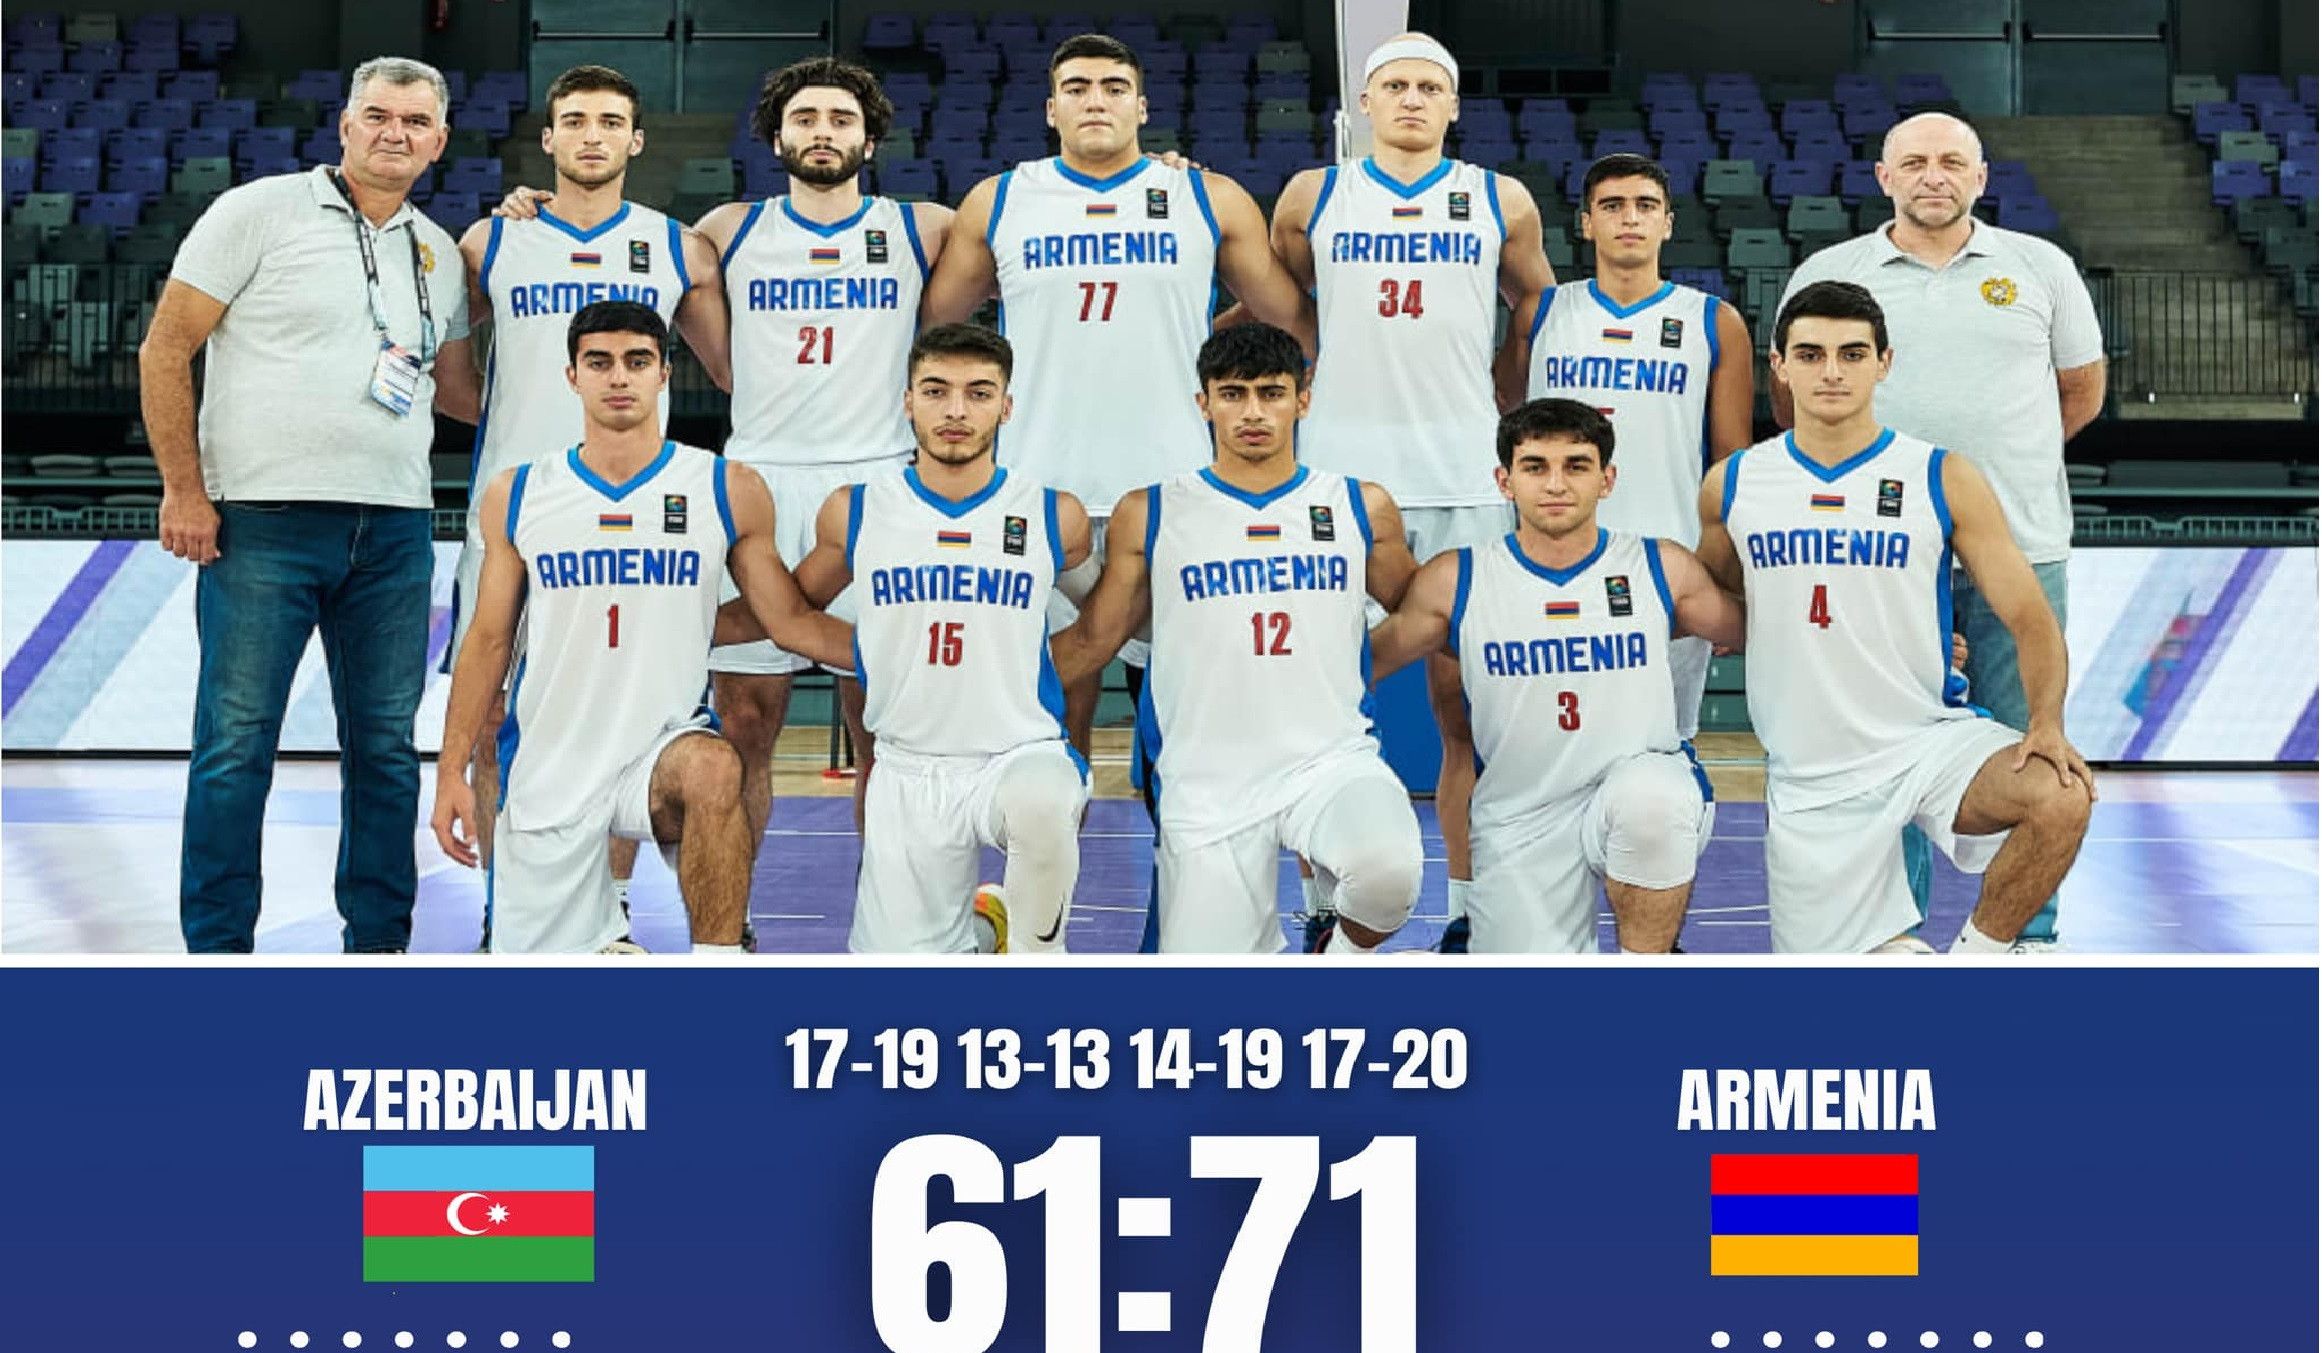 Basketball team of Armenia defeated national team of Azerbaijan